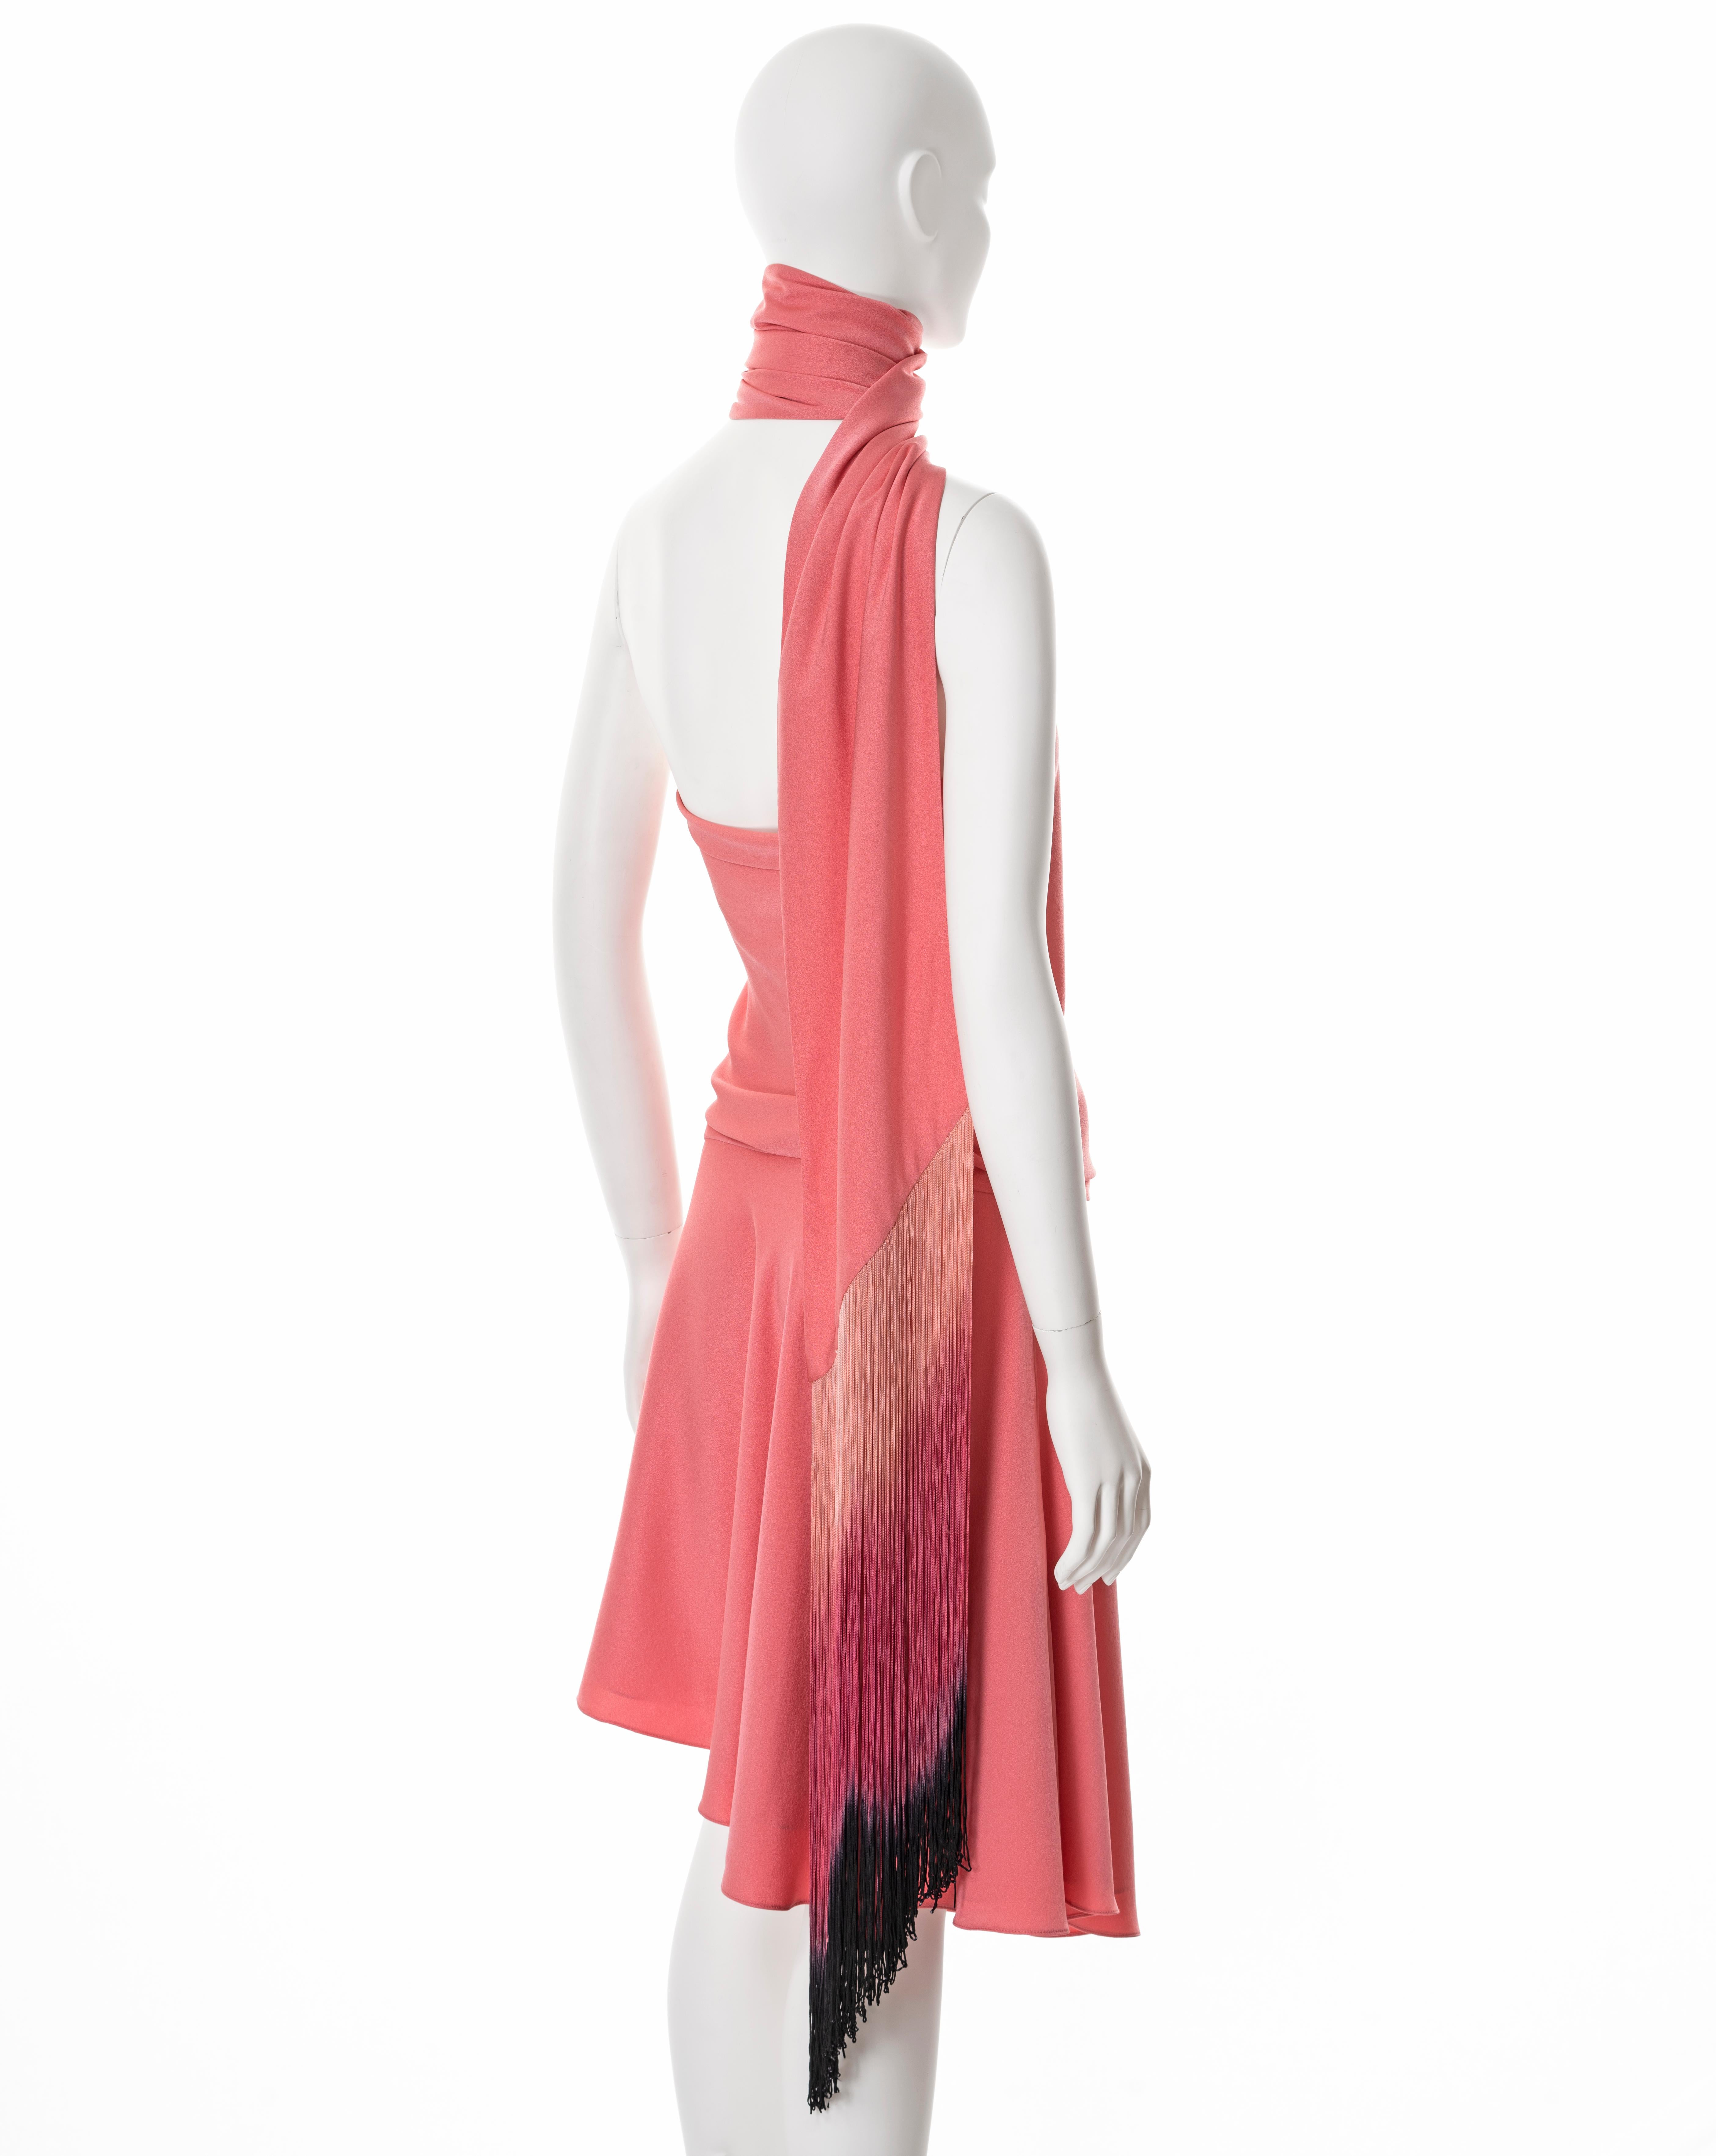 Alexander McQueen pink bias cut silk fringed scarf dress, ss 2008 For Sale 2